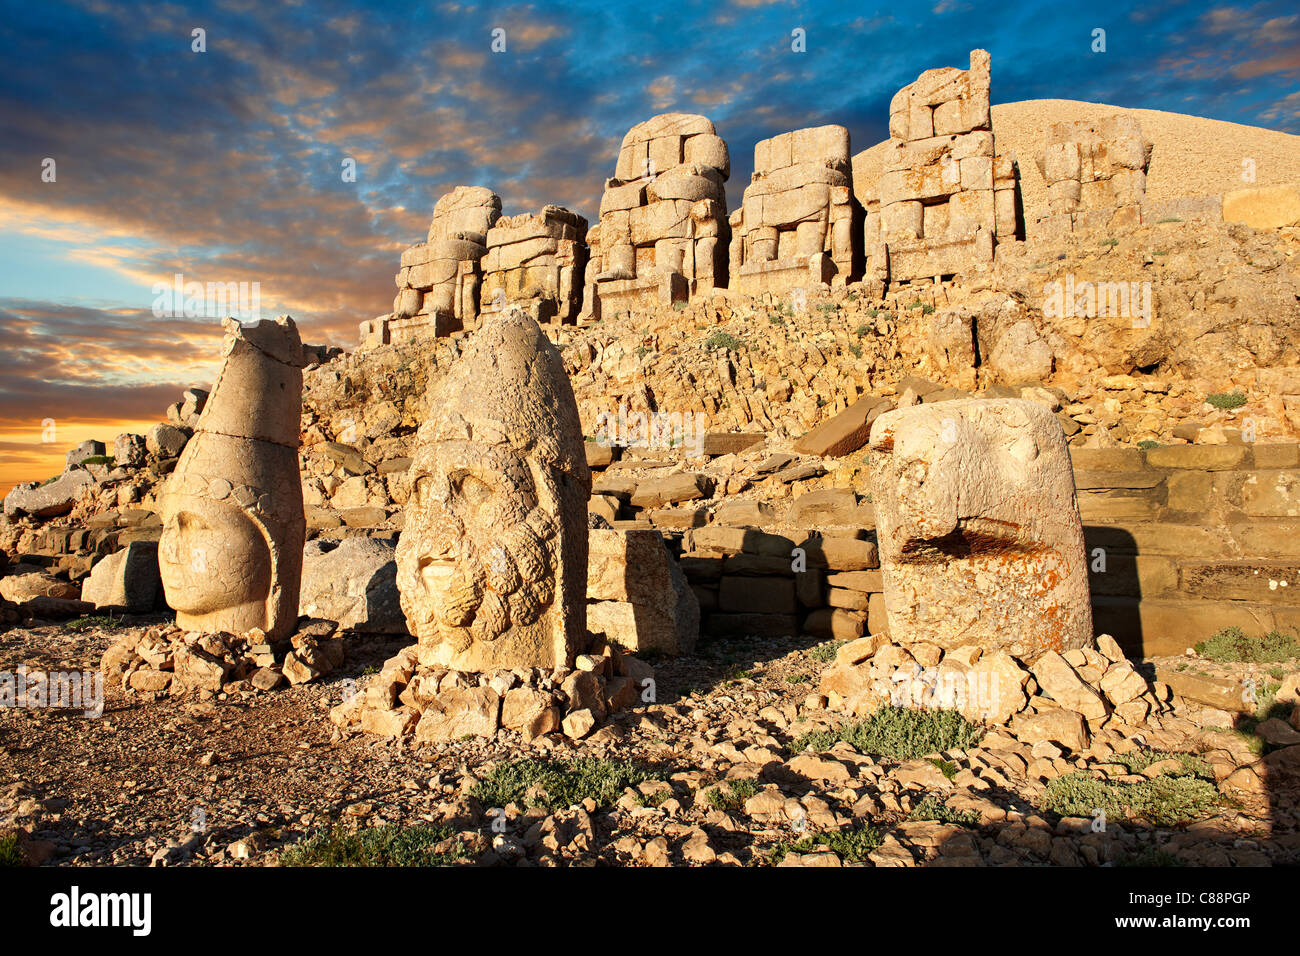 Mount Nemrut Ausgrabungsstätte der Türkei - Adıyaman Grab Statuen Stockfoto